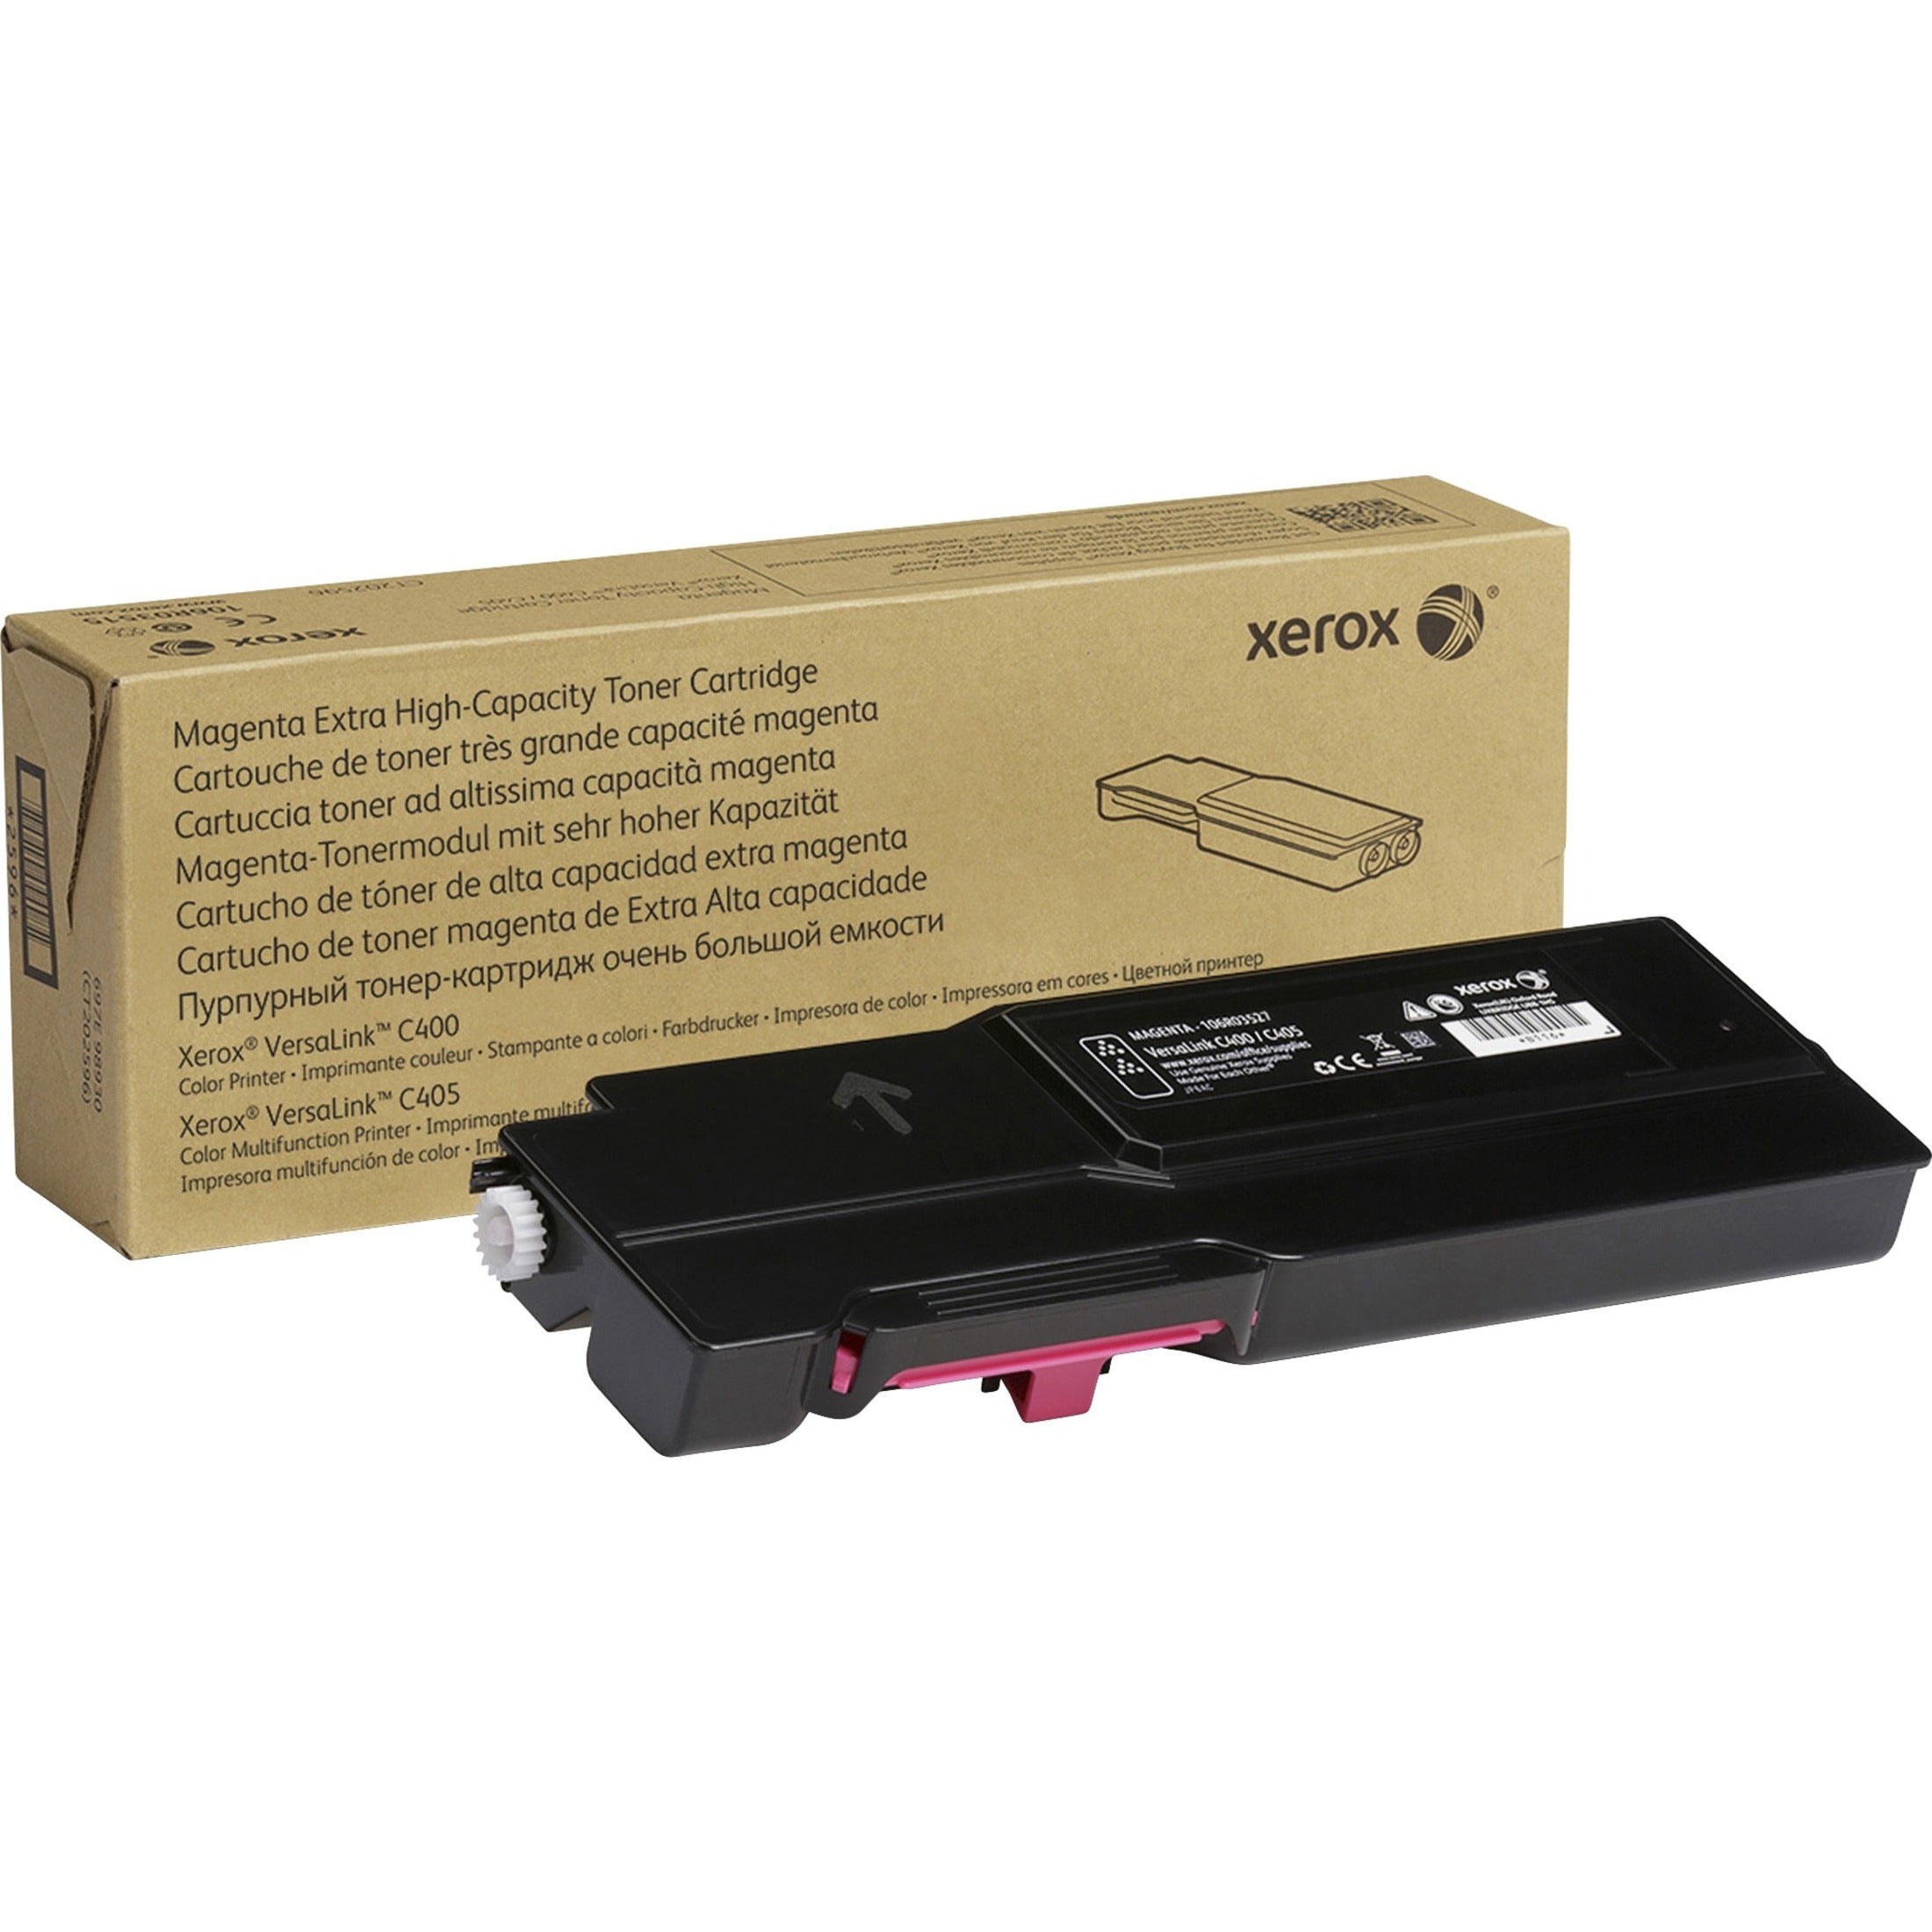 Xerox 106R03527 Genuine Magenta Extra High Capacity Toner Cartridge For The VersaLink C400/C405, 8000 Pages